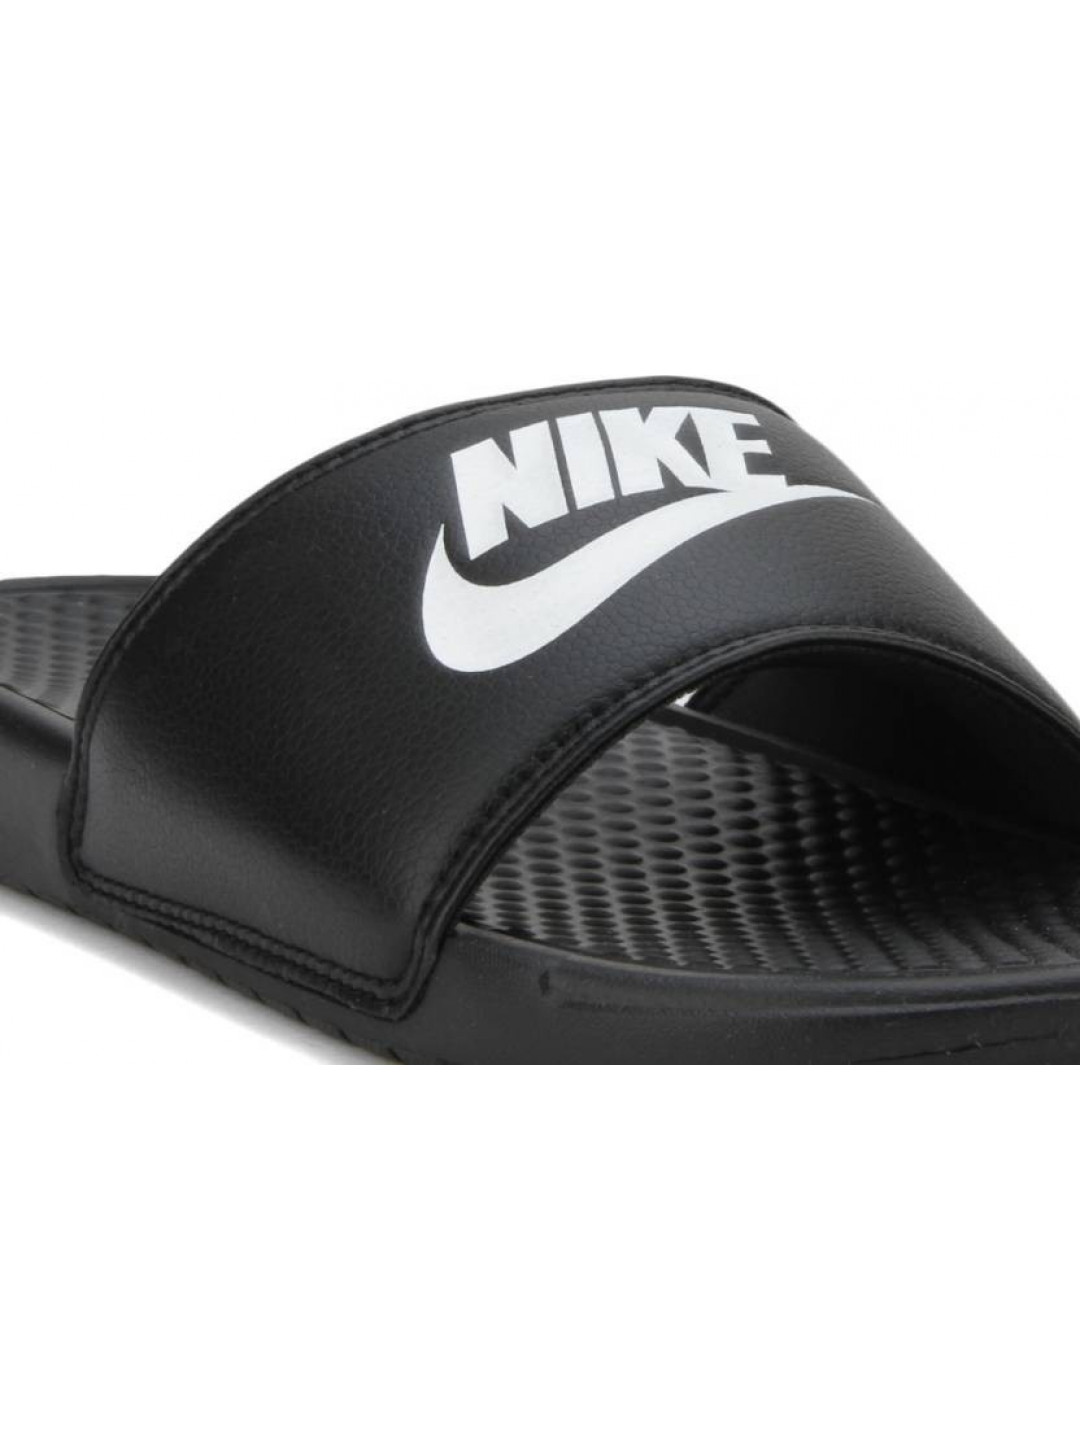 Nike Sandals Flip Flops Men's Black/Red New without Box 9 - Locker Room  Direct